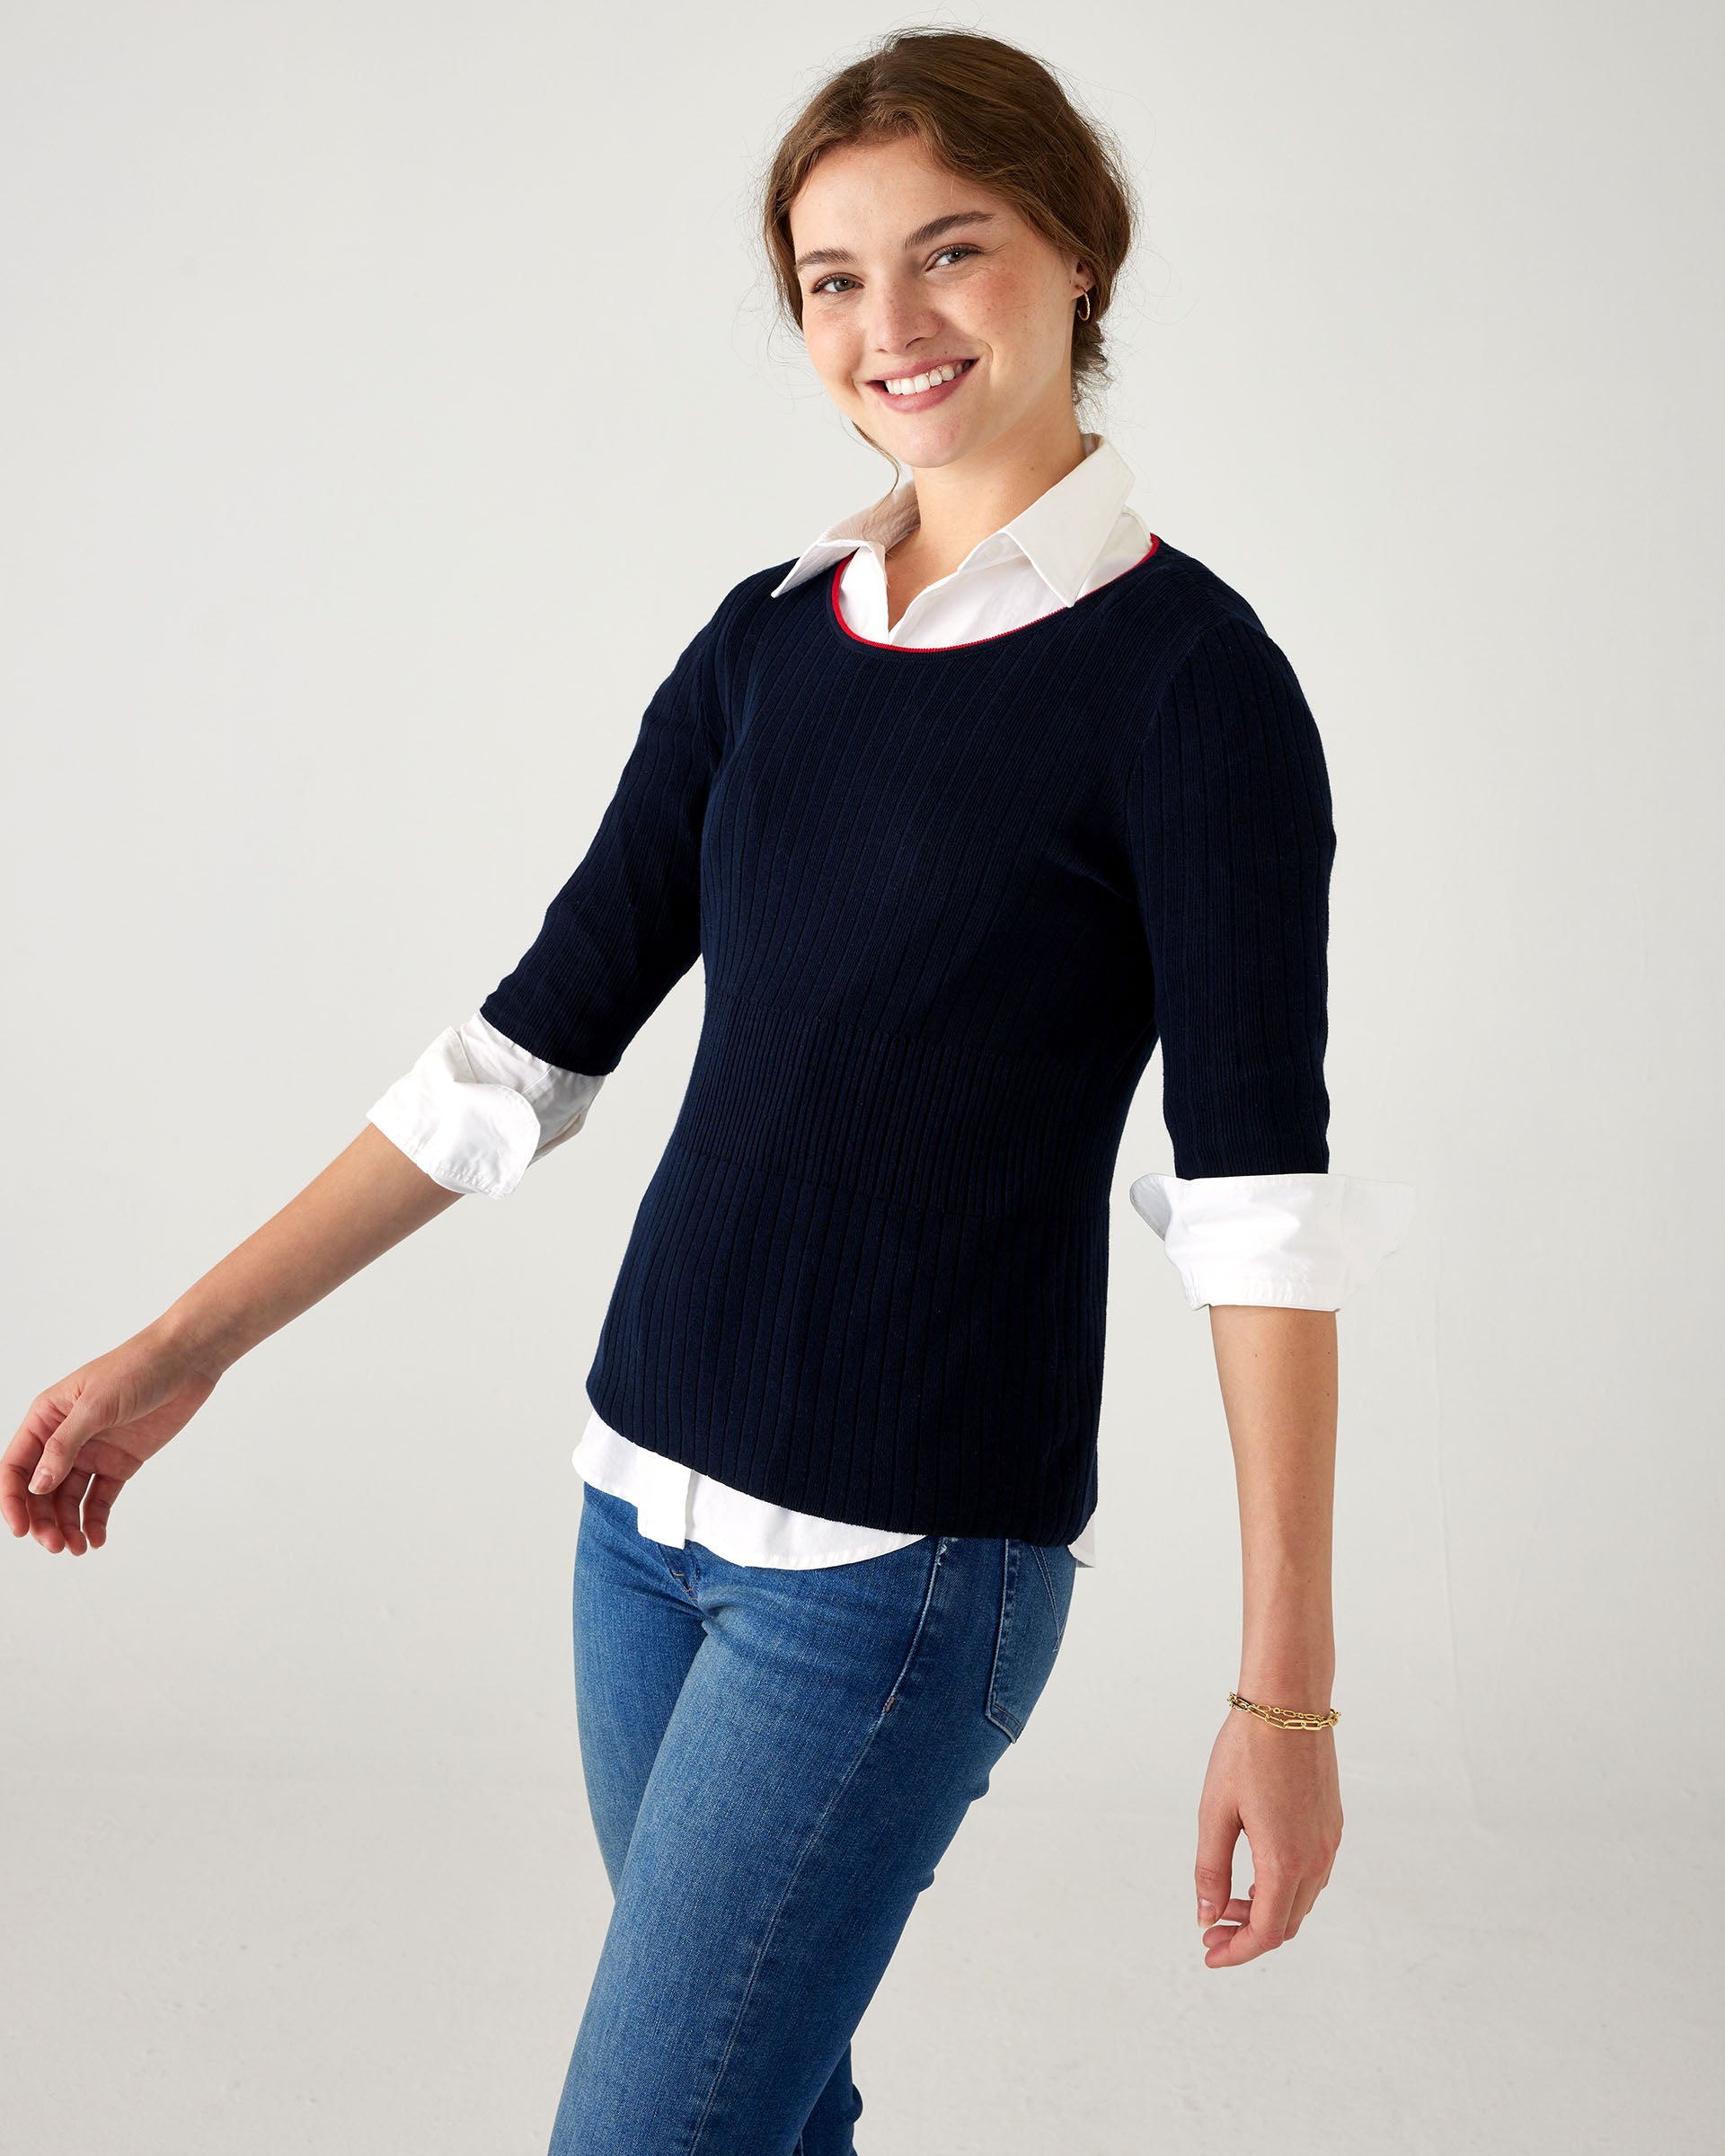 Women's Fall Autumn Navy Short Sleeve Rib Knit Peplum Waistline Sweater With Red Neckline Detail Front View 3